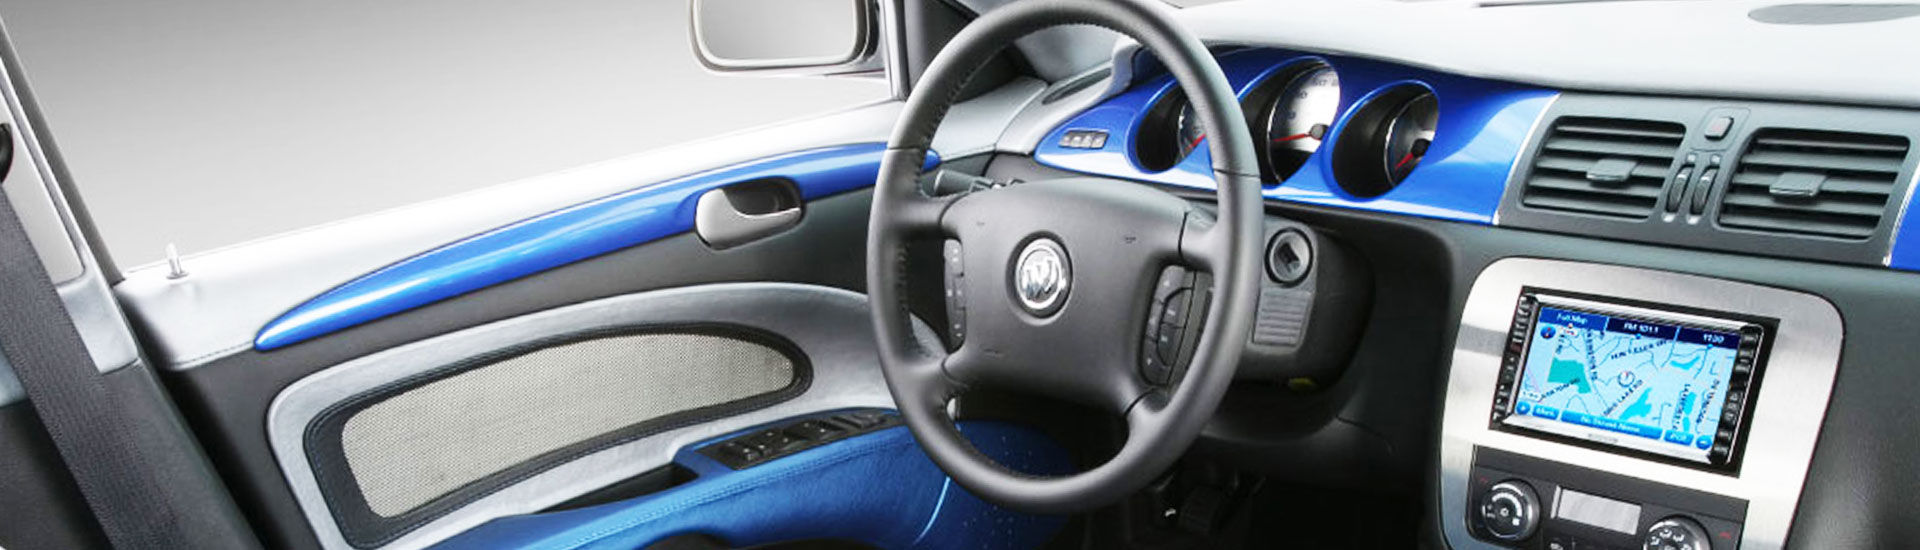 2015 Buick Regal Dash Kits